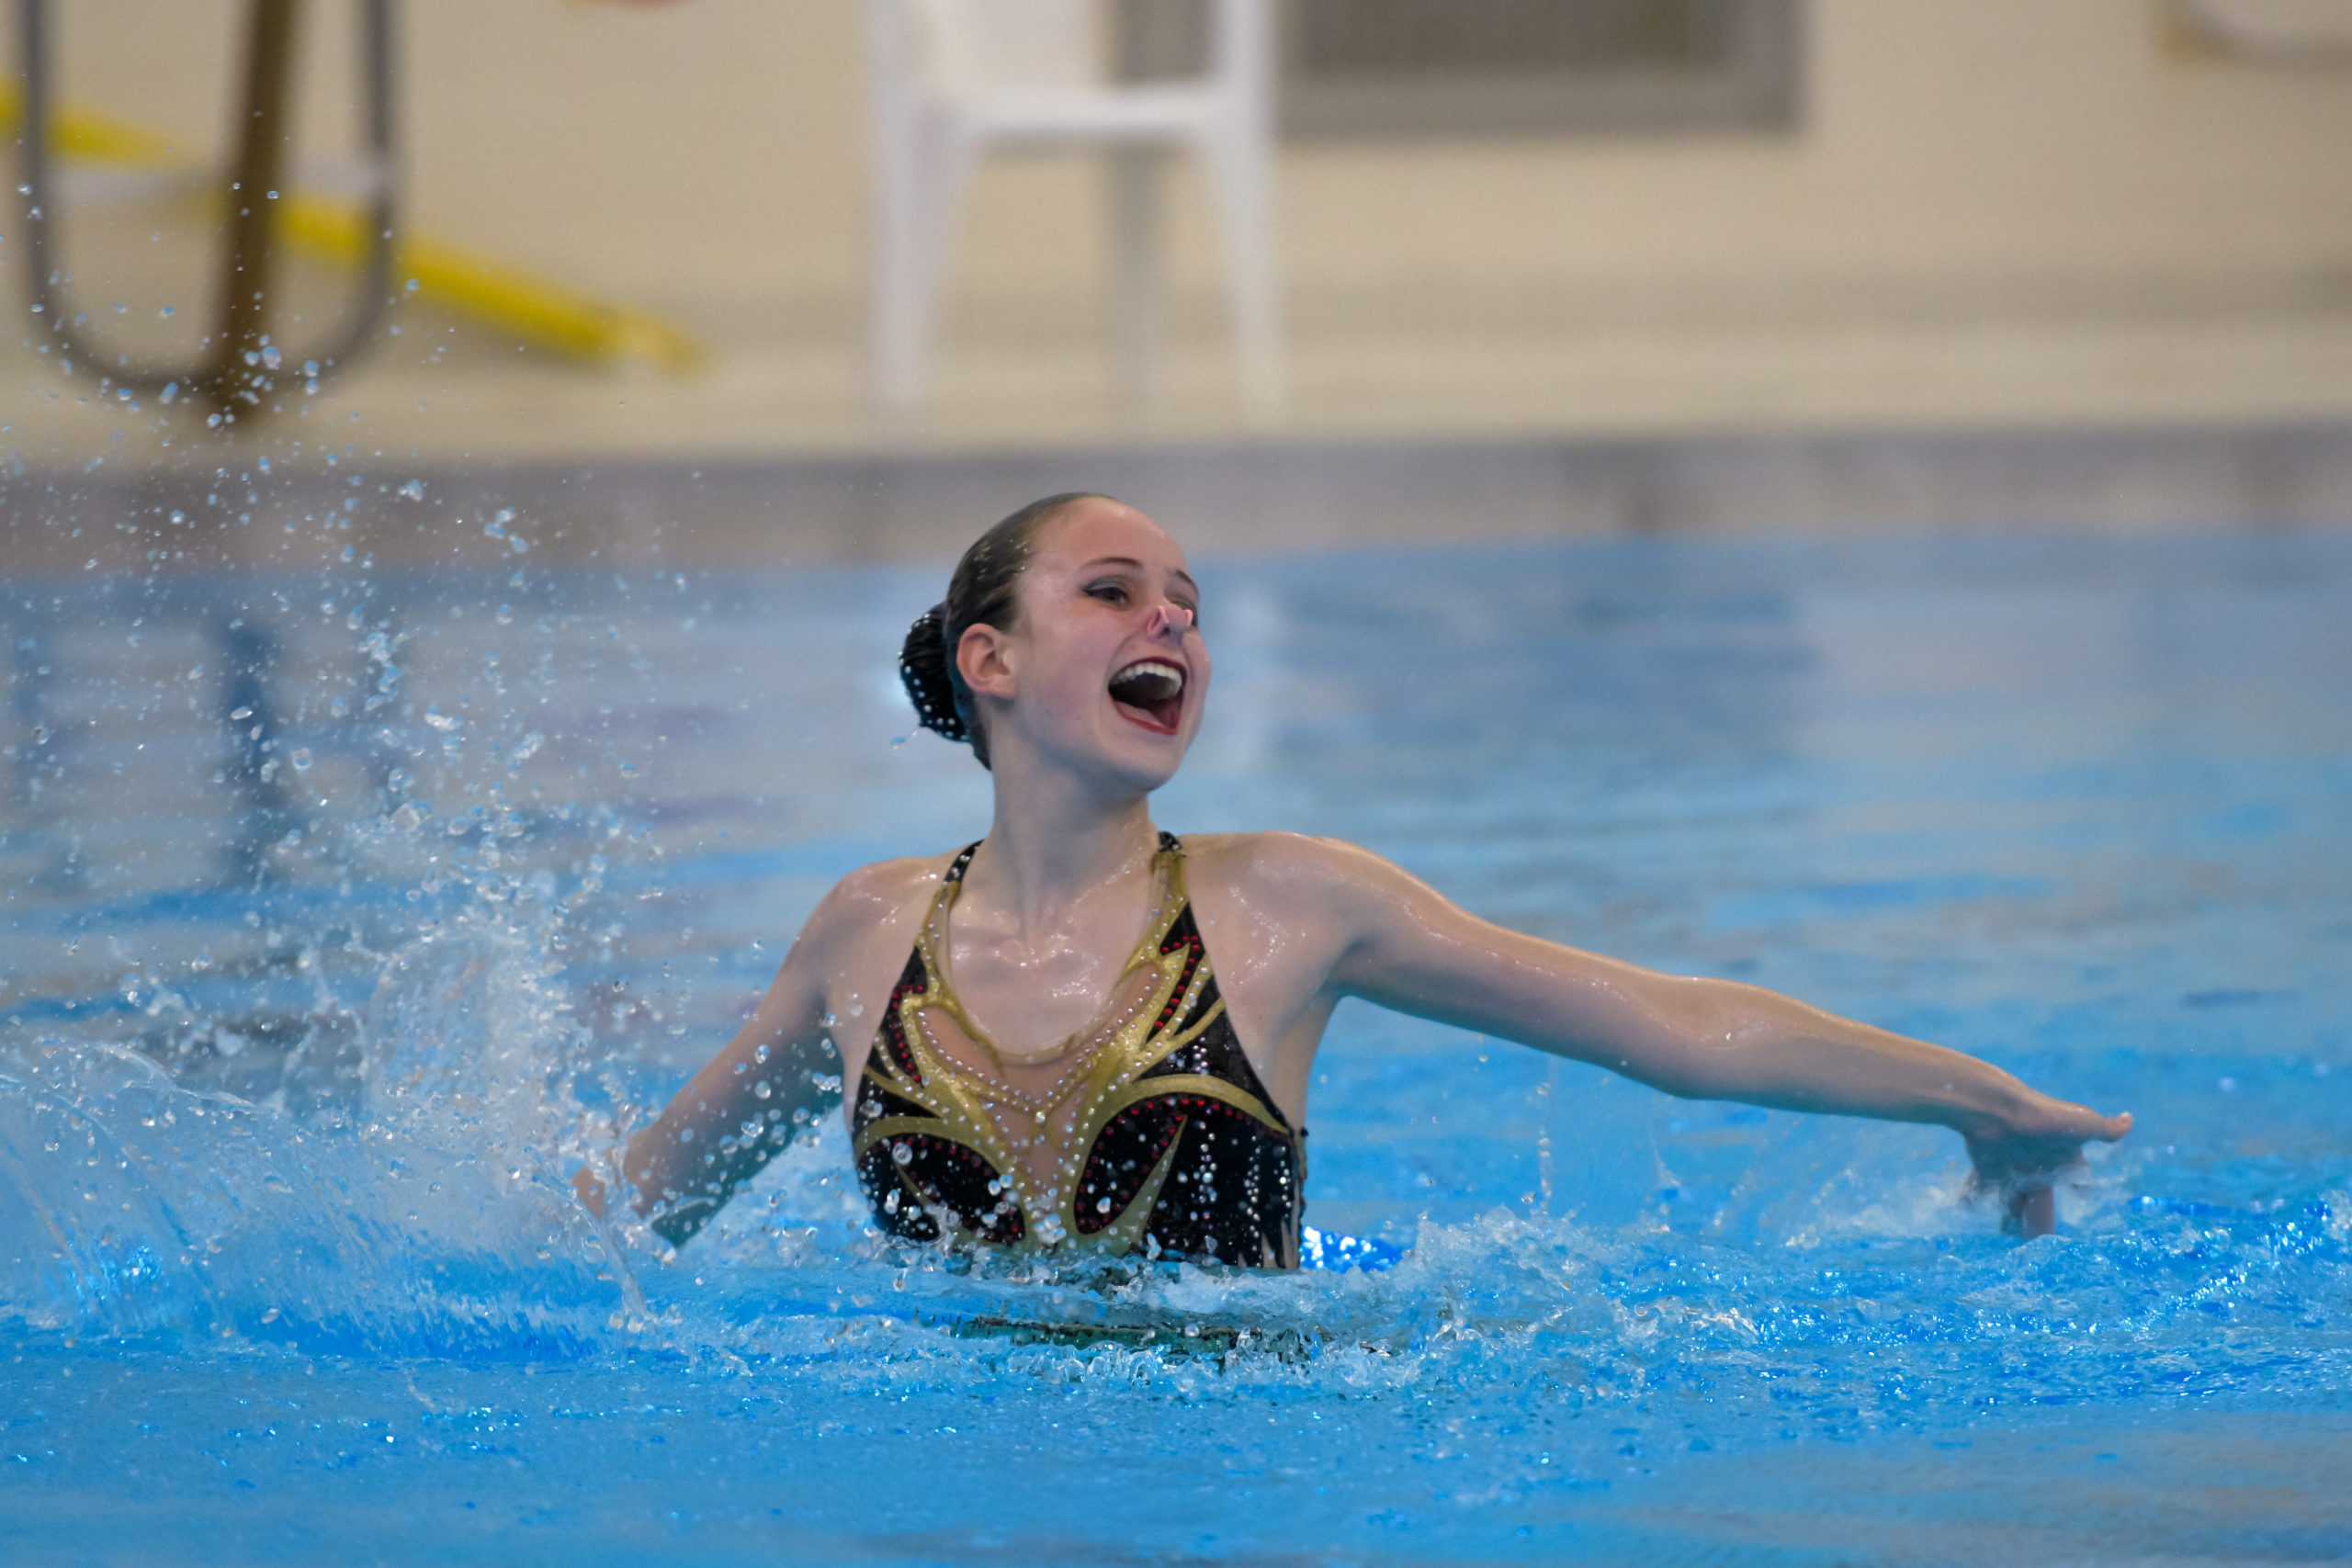 artistic swimmer splashing the water